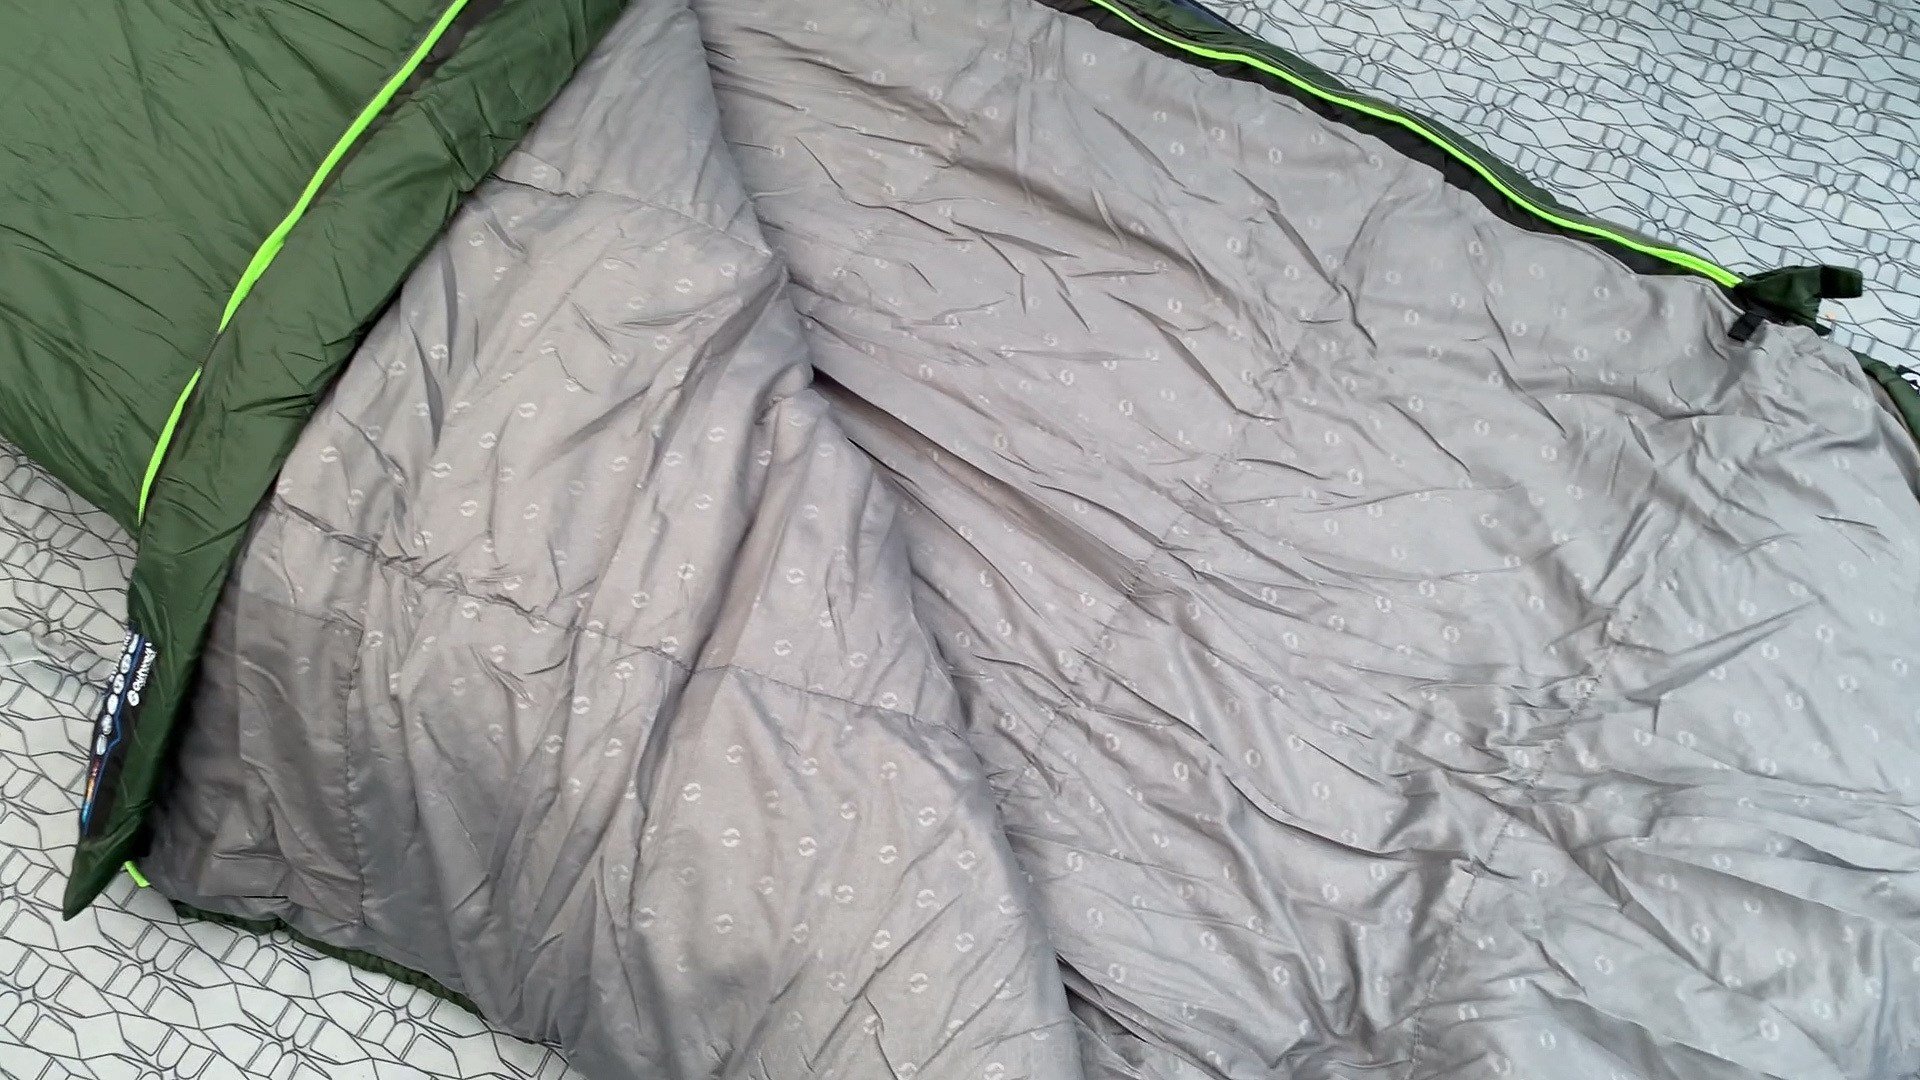 Inside the sleeping bag